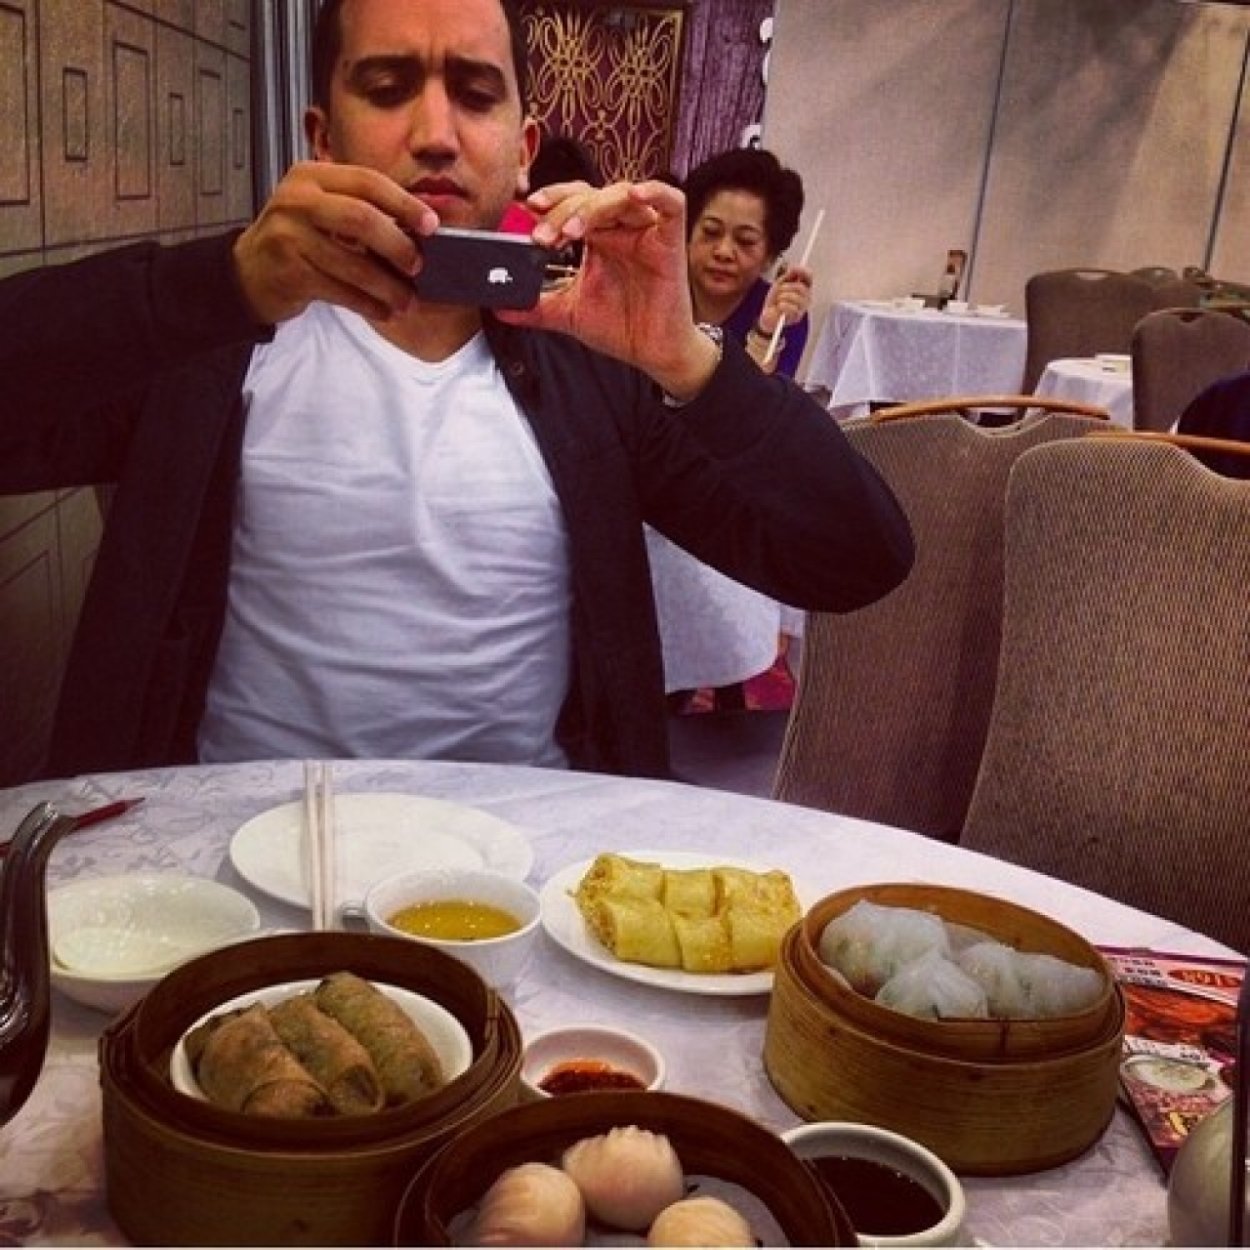 Instagram kvelikanov. Селфи еды в кафе. Селфи с едой. Селфи в кафе. Селфи в кофейне.